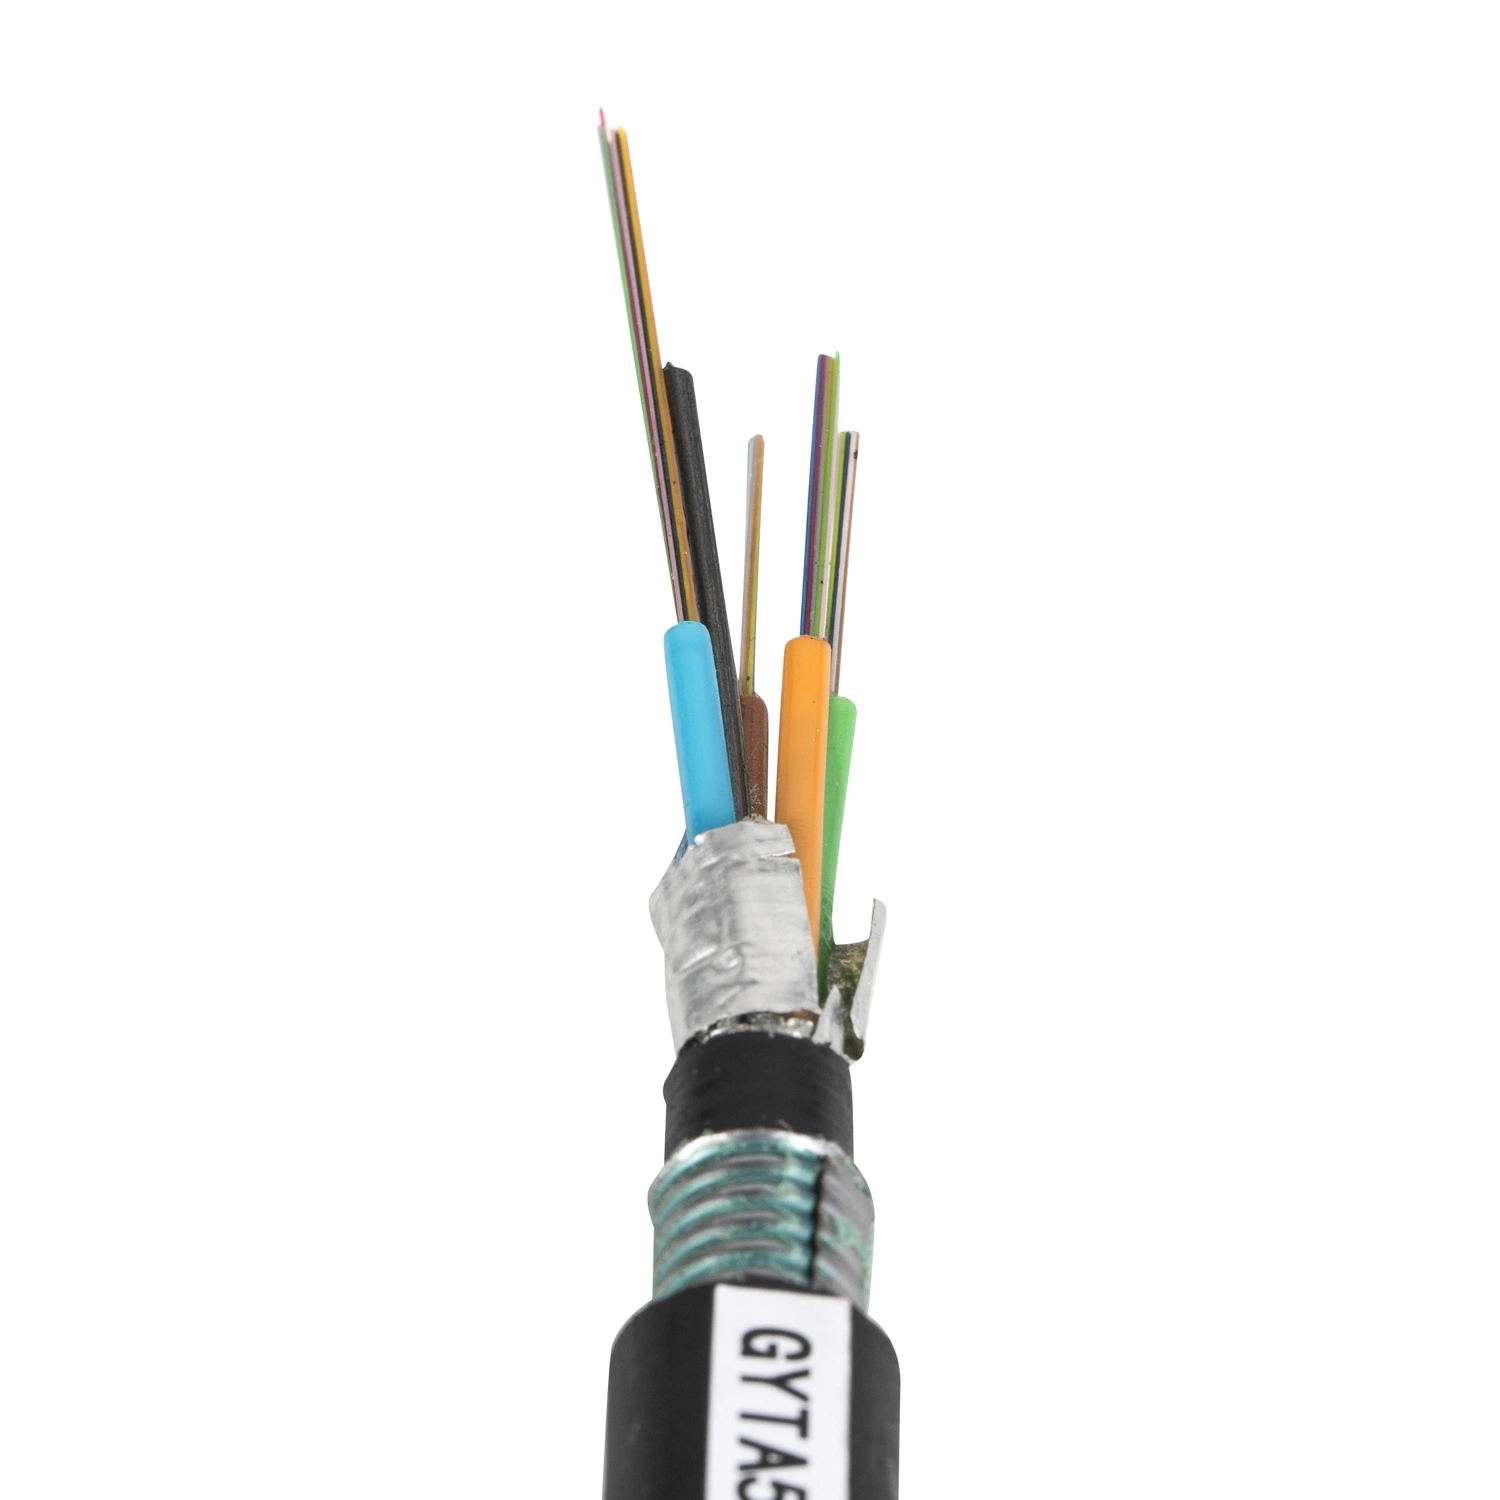 Manufacturer 2core 6core 12core Flat Drop Cable Gyfxtby Outdoor Overhead Single Mode Fibre Optical Cable Fiber Optic Cable Communication Cable